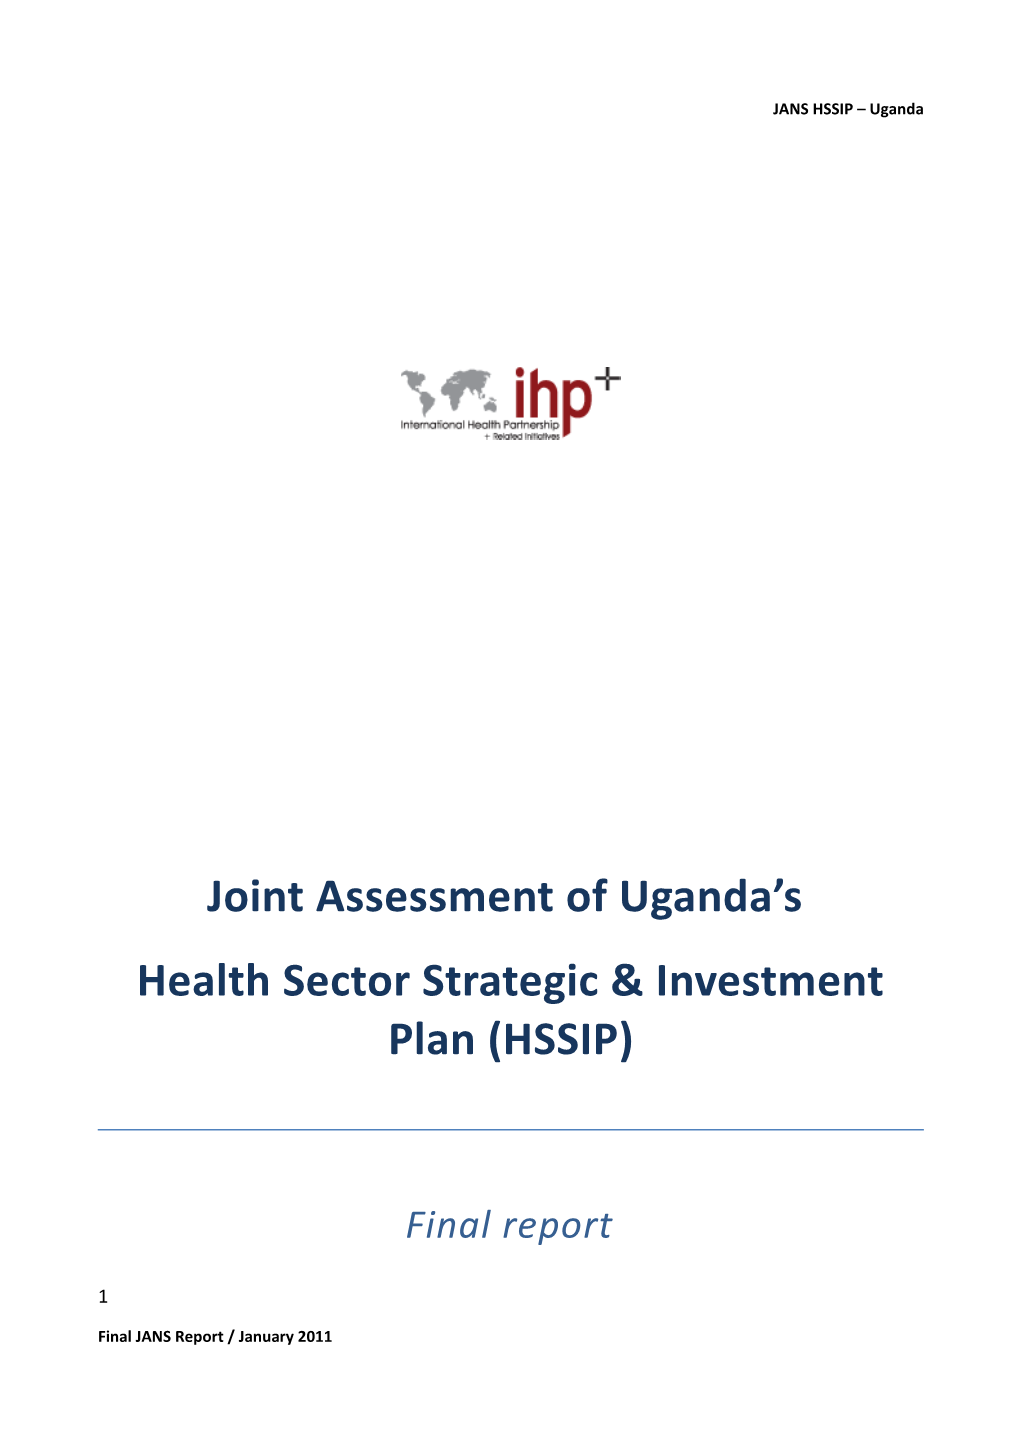 Health Sector Strategic & Investment Plan (HSSIP)